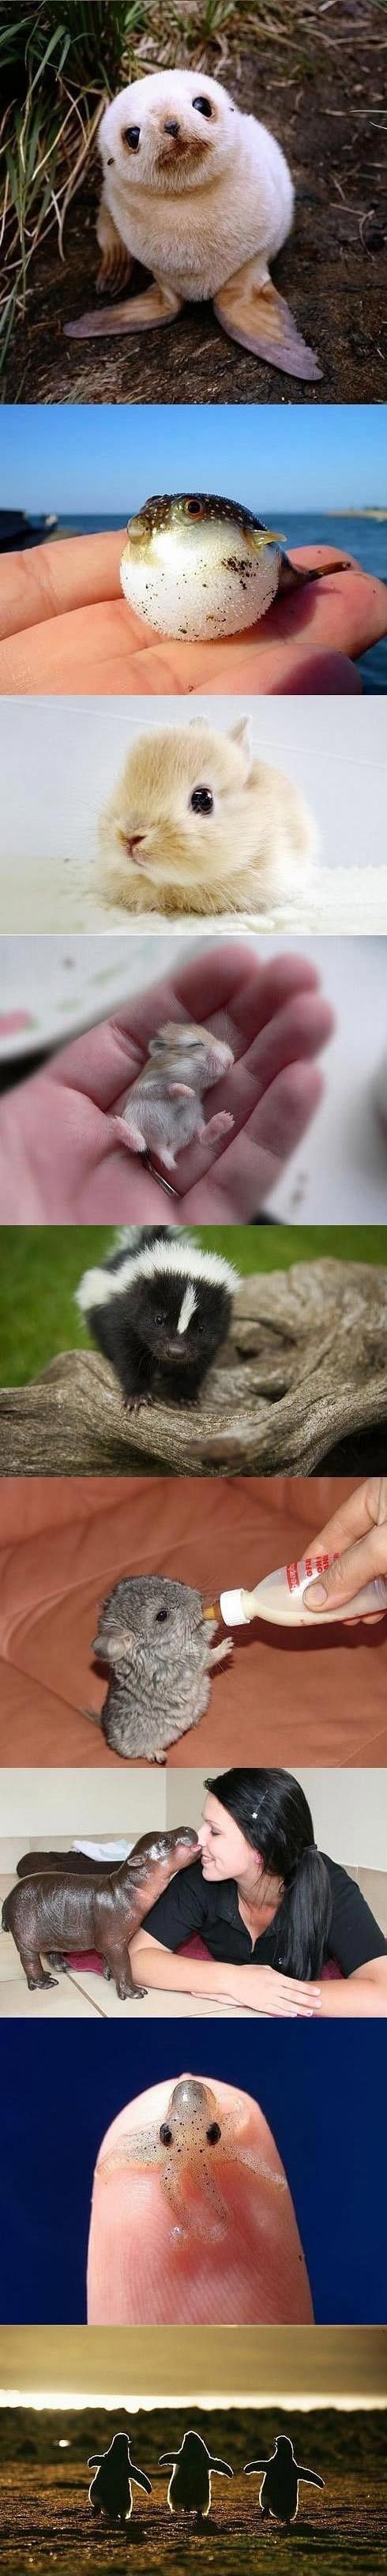 OMG. Adorable Precious Baby Animals originally pin...